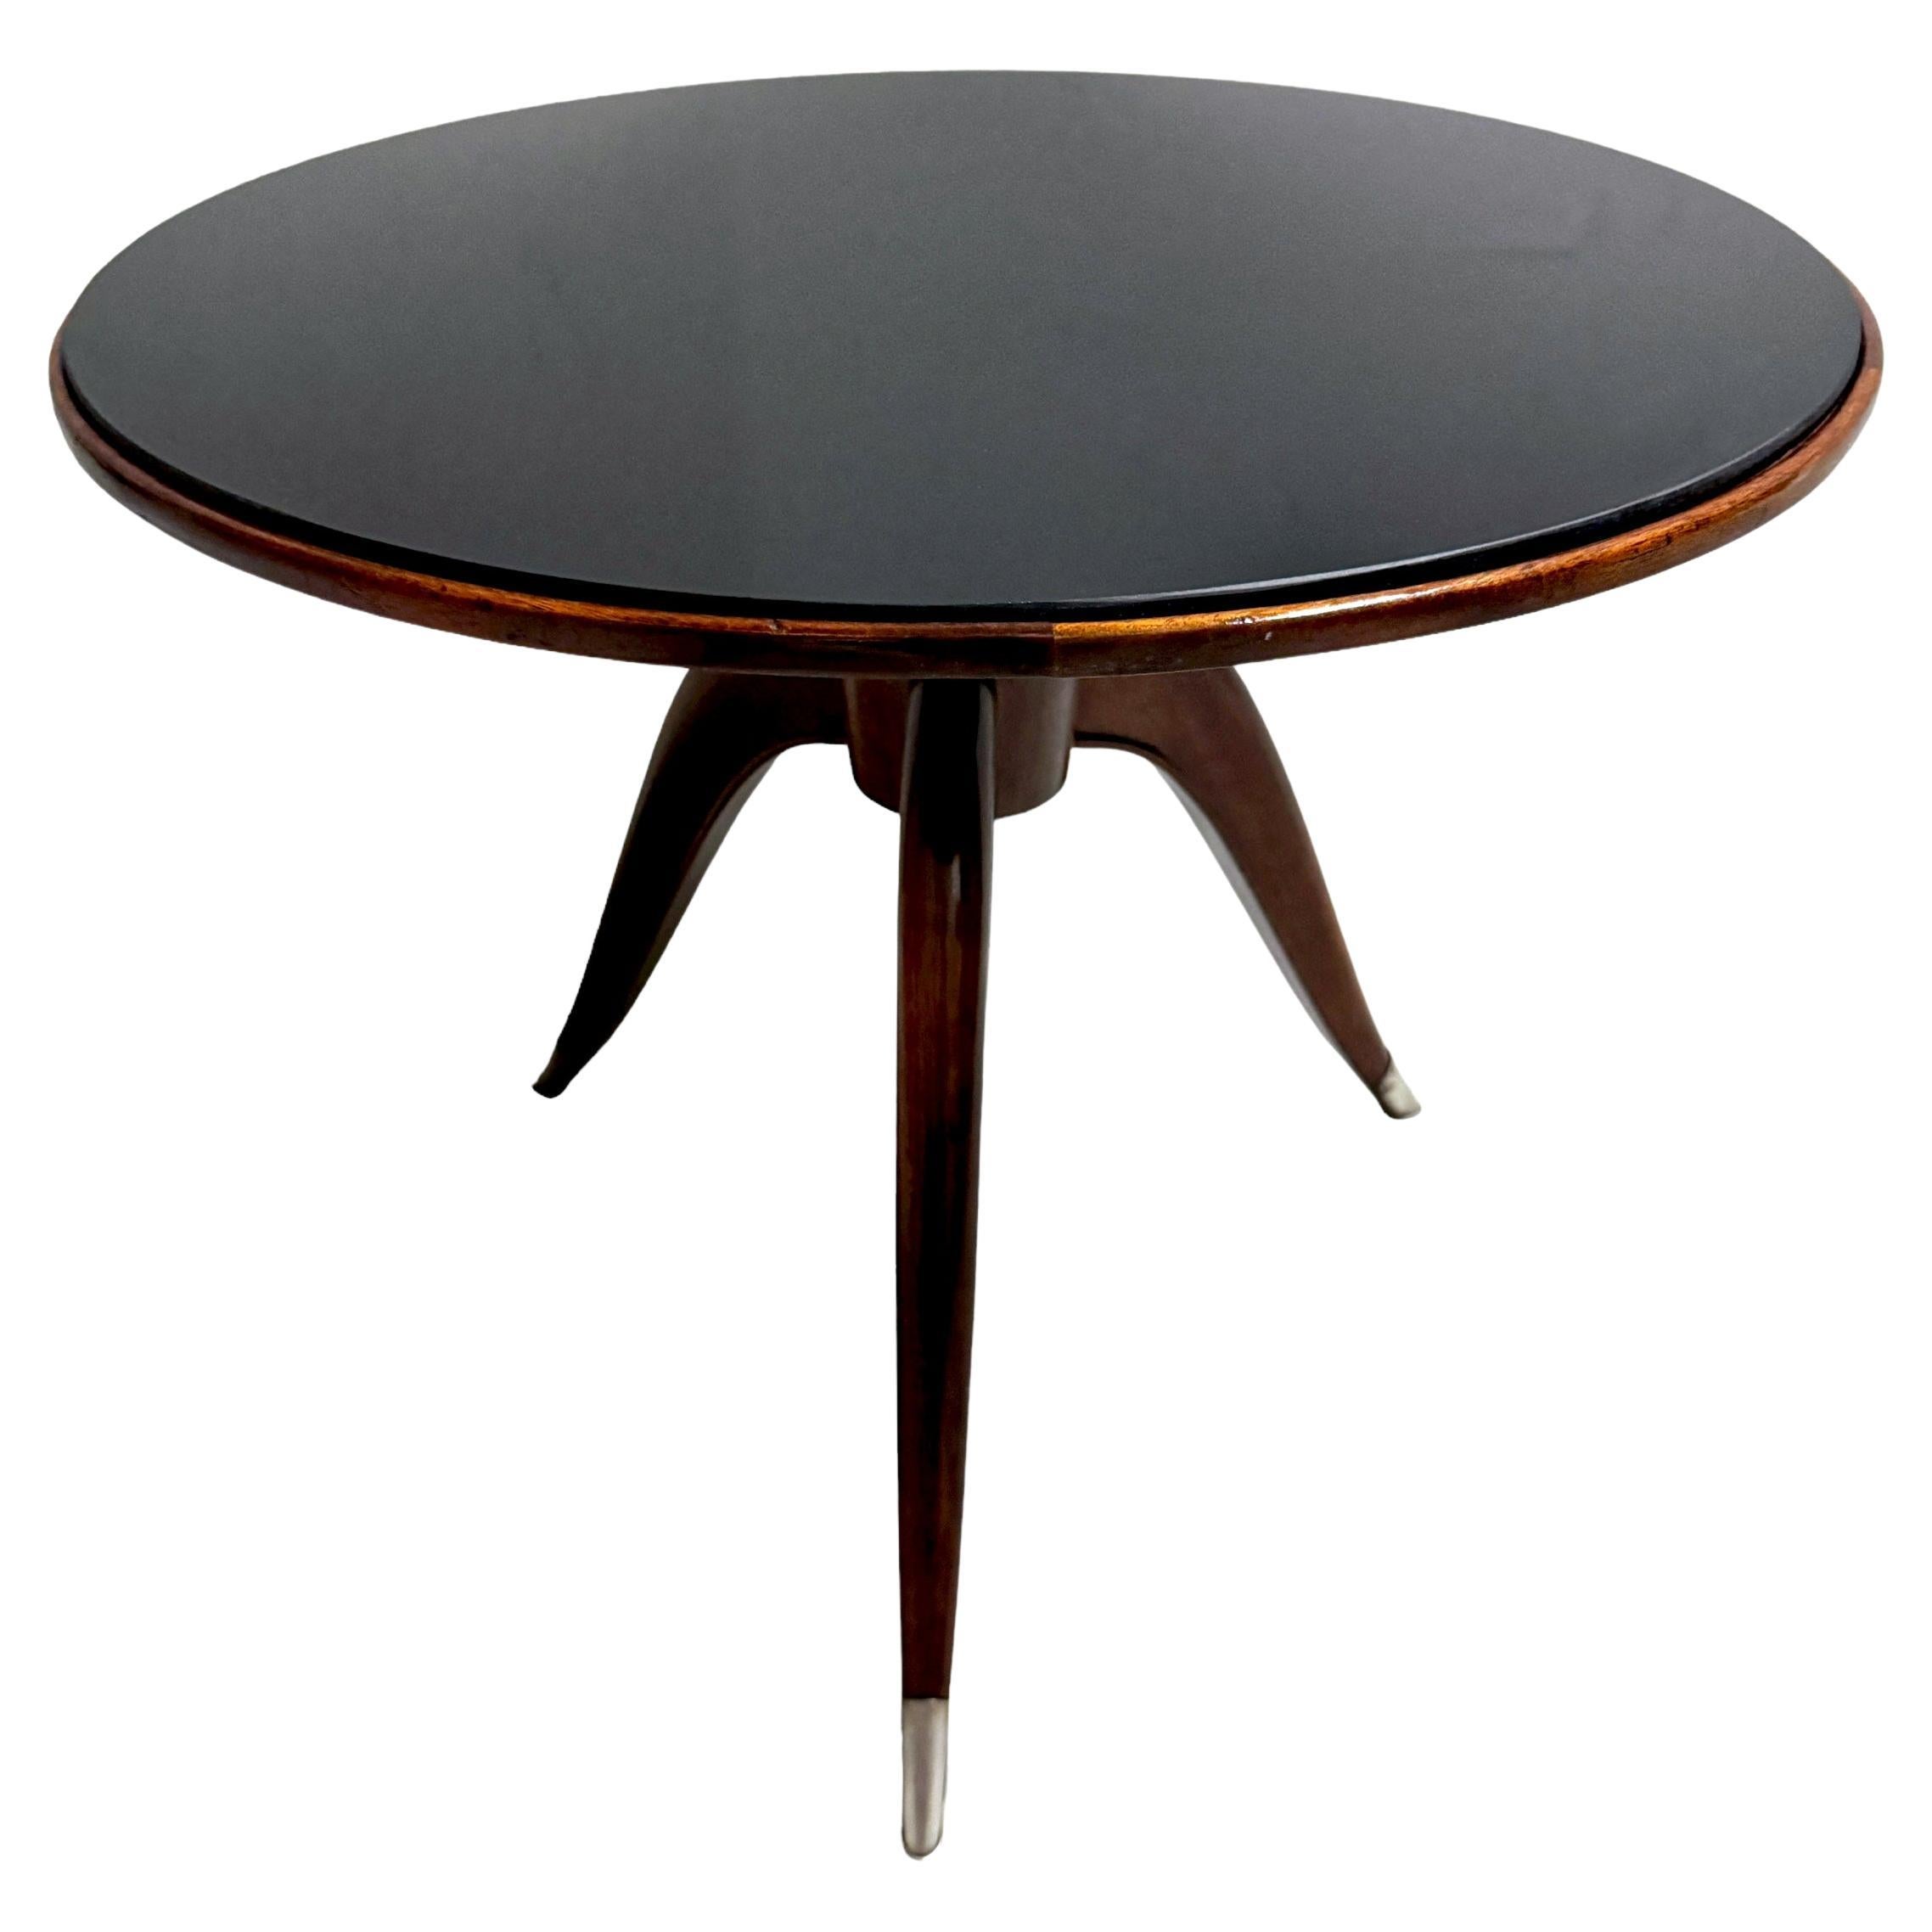 Sleek Art Deco Circular Side Table  in the Style of Ruhlmann